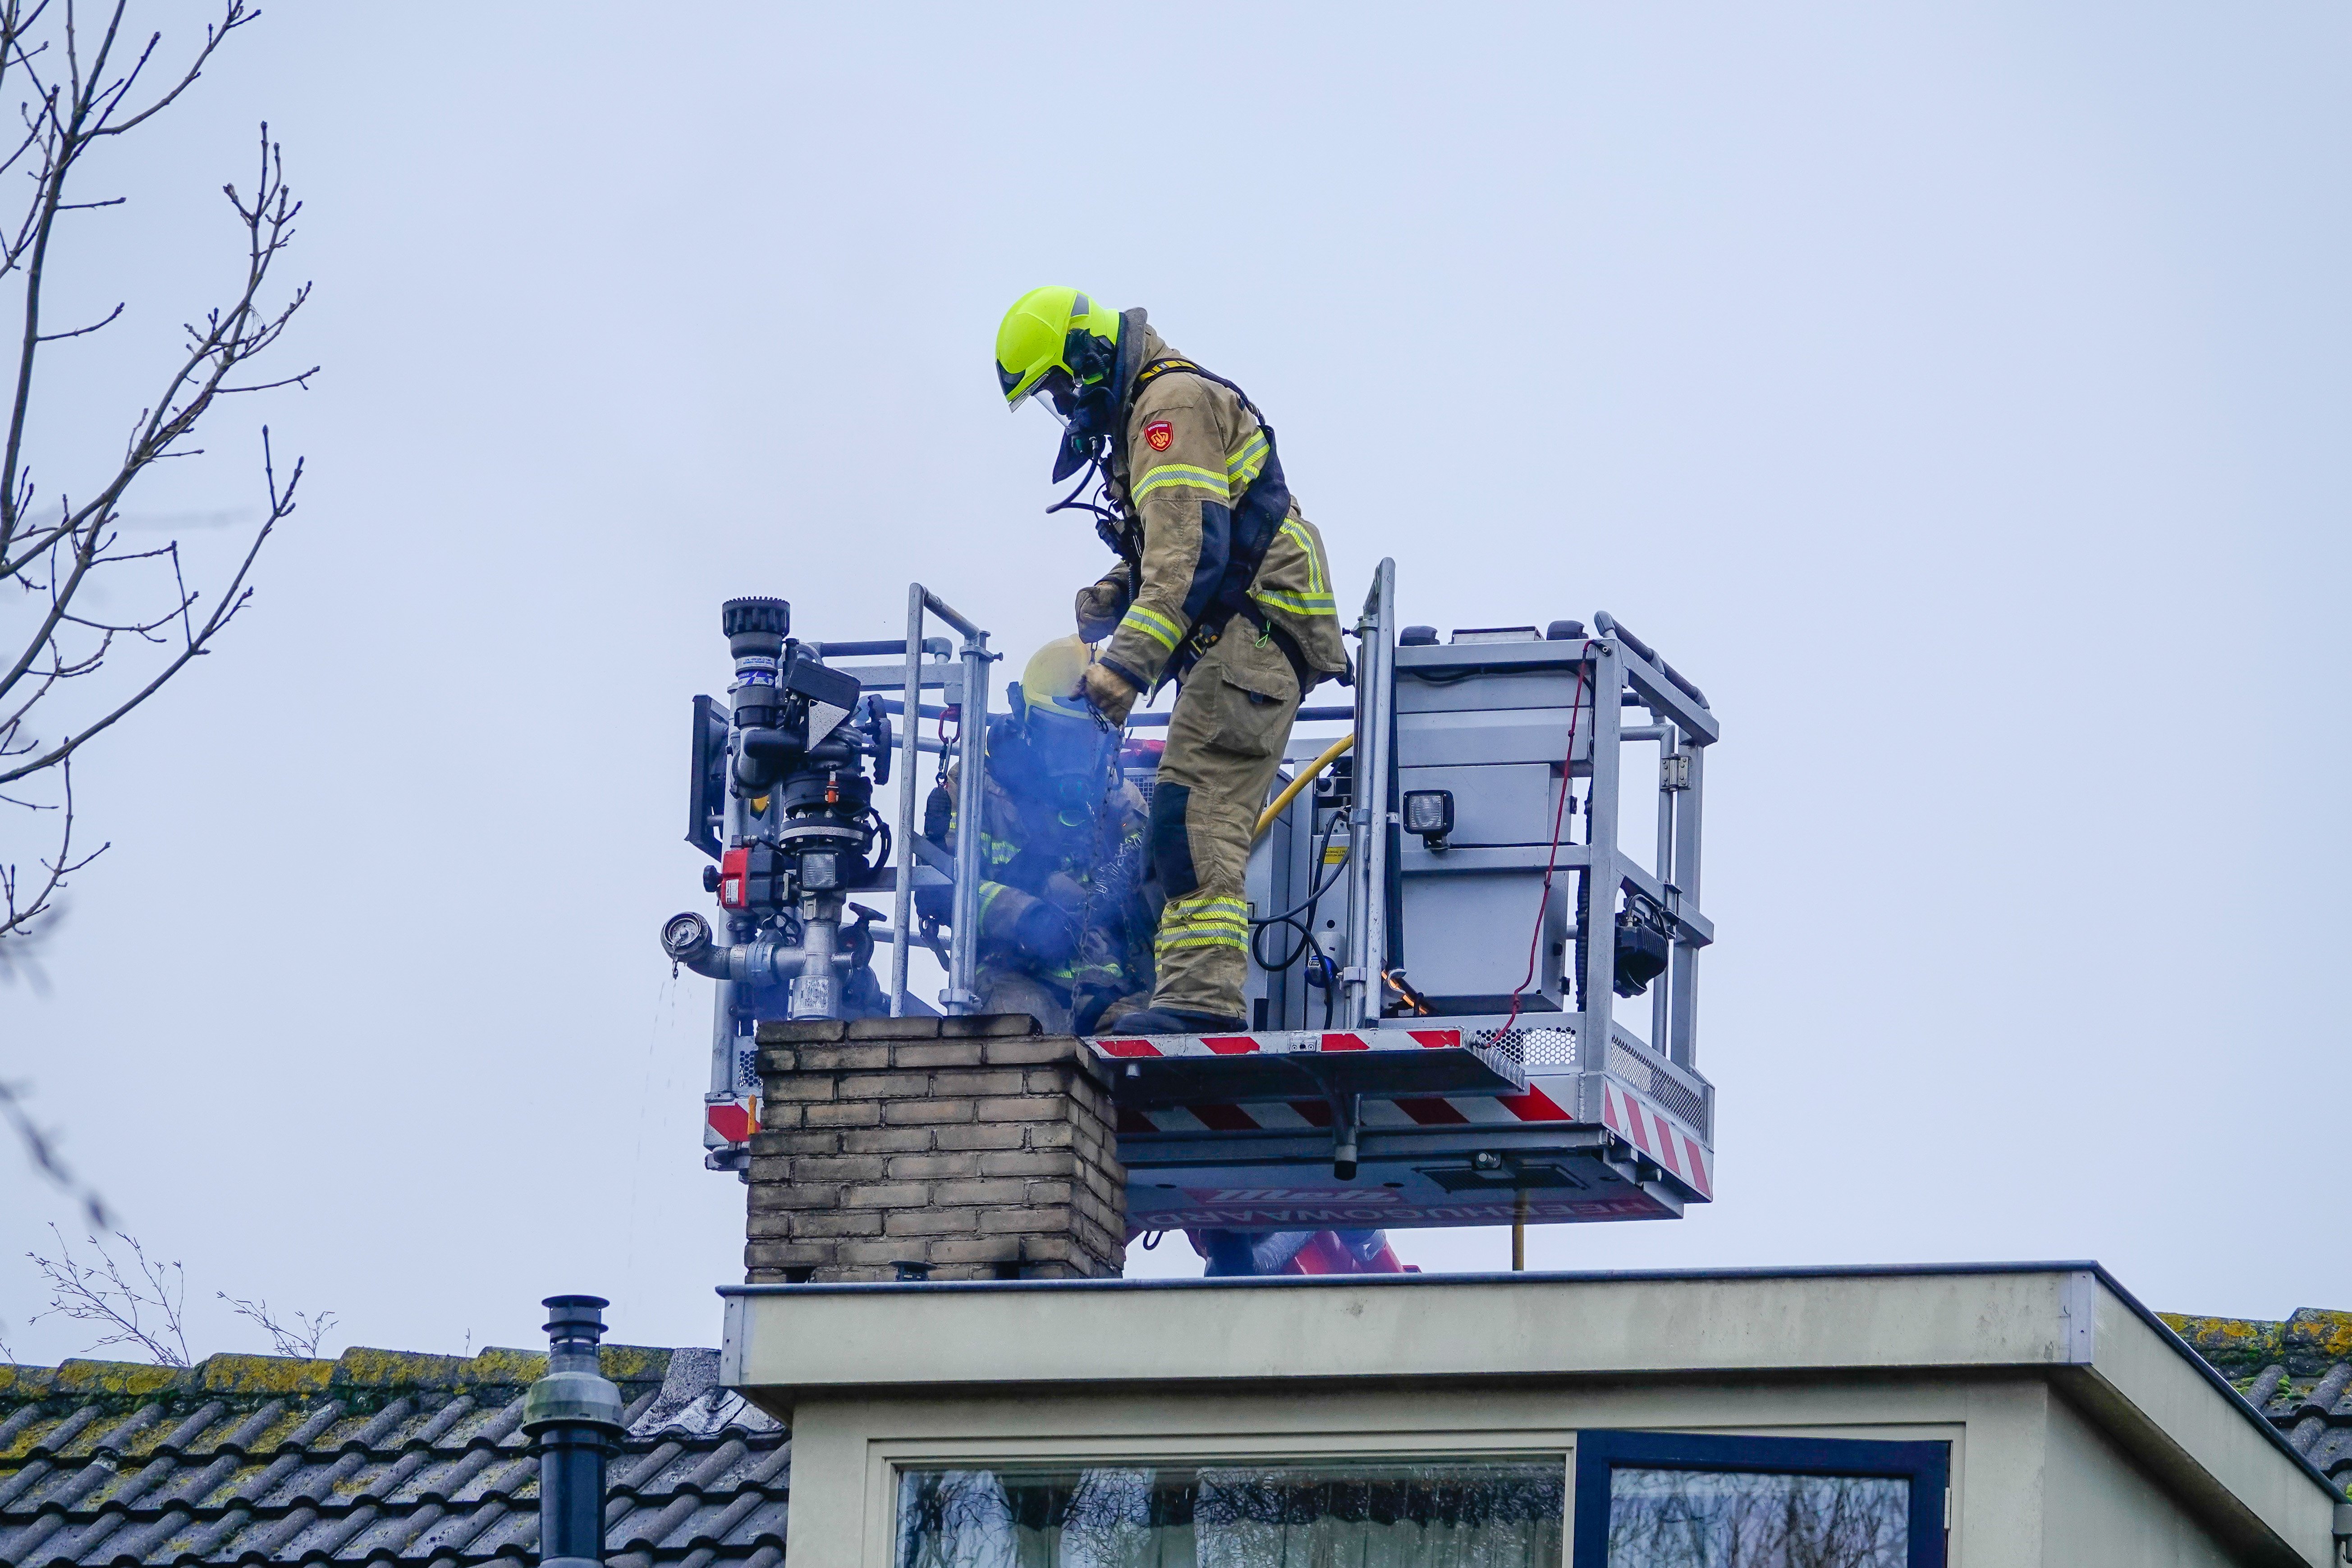 Firemen rescuing a man stuck in the chimney | Source: Shutterstock